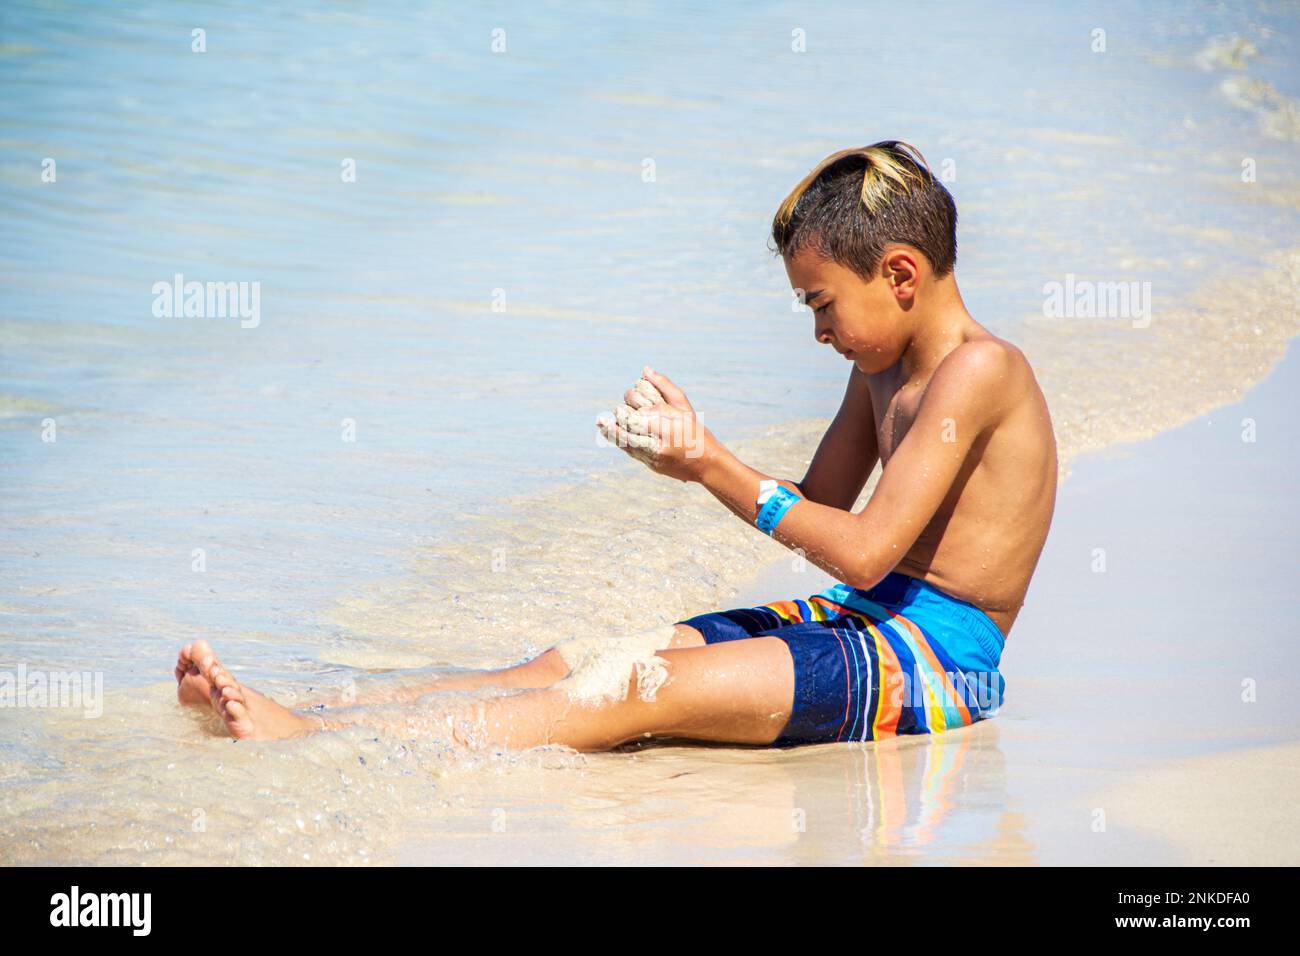 A child playing in the sand on a beach, Roatan, Honduras. Stock Photo